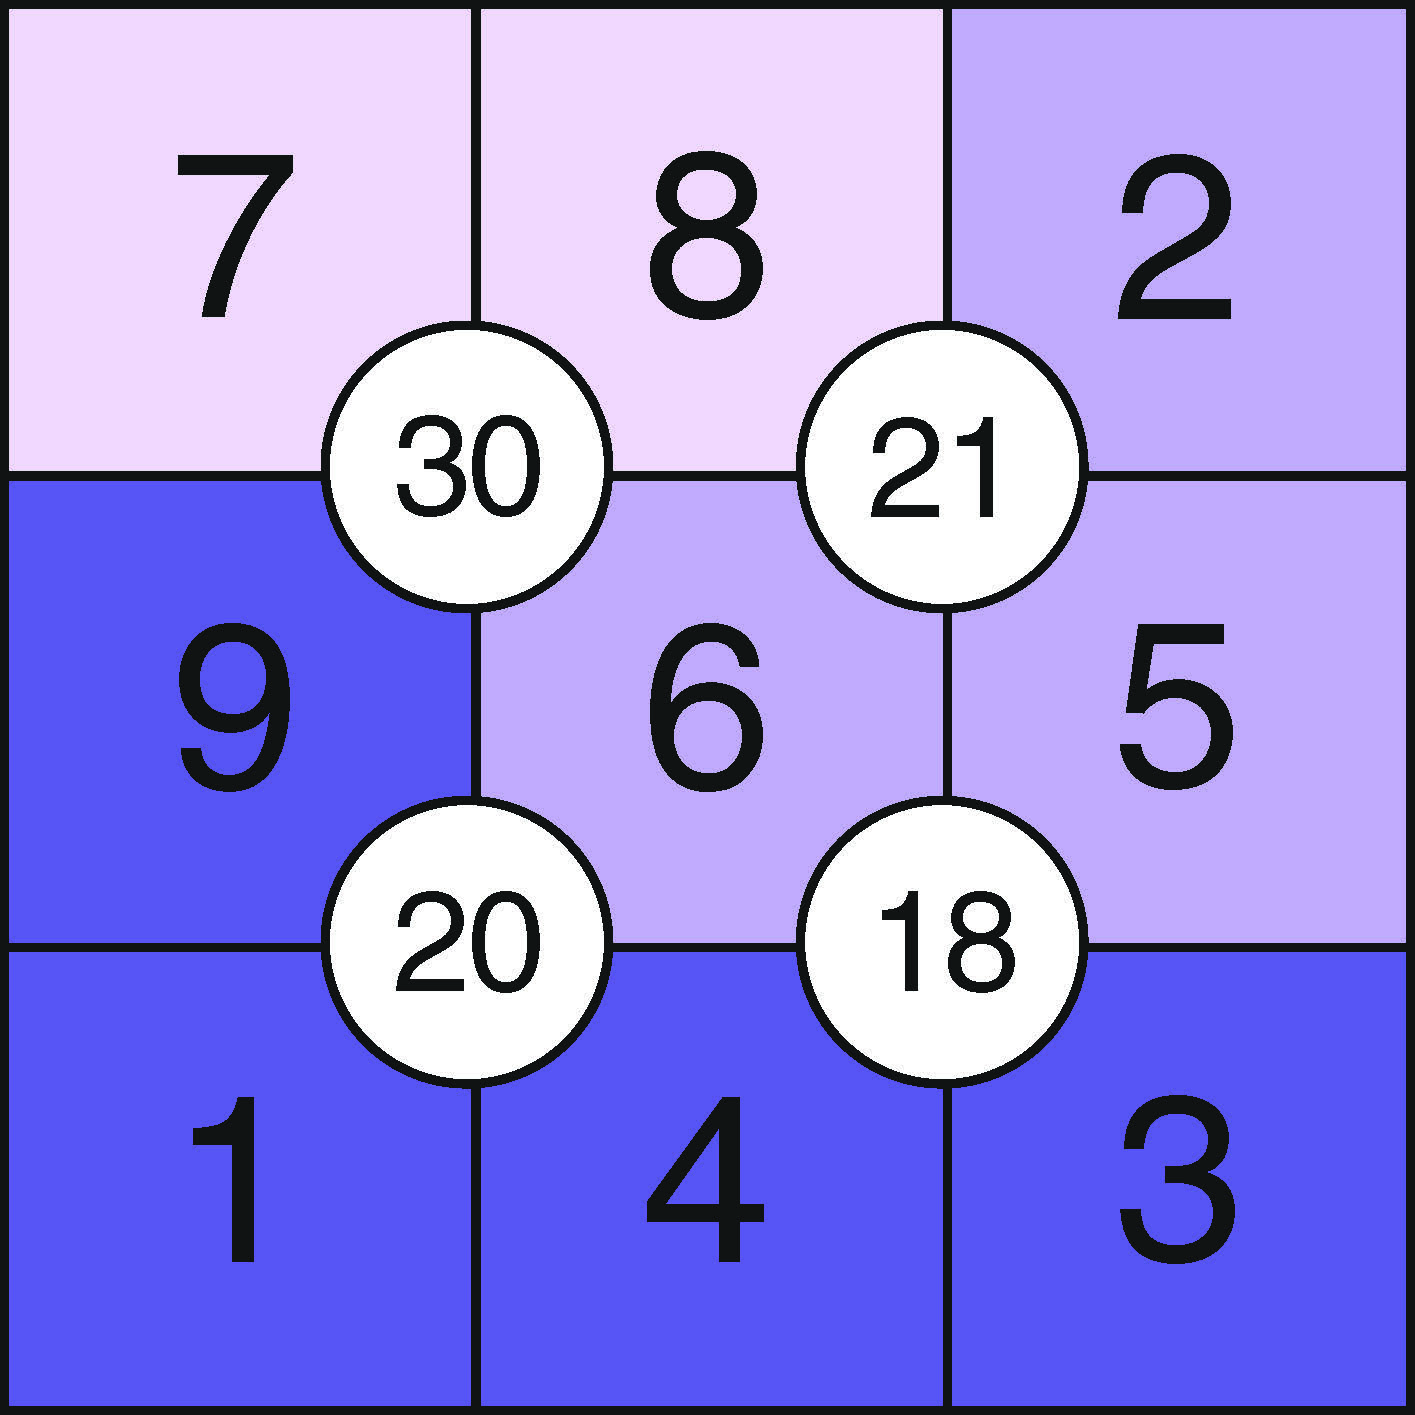 Sakuro solved example puzzle